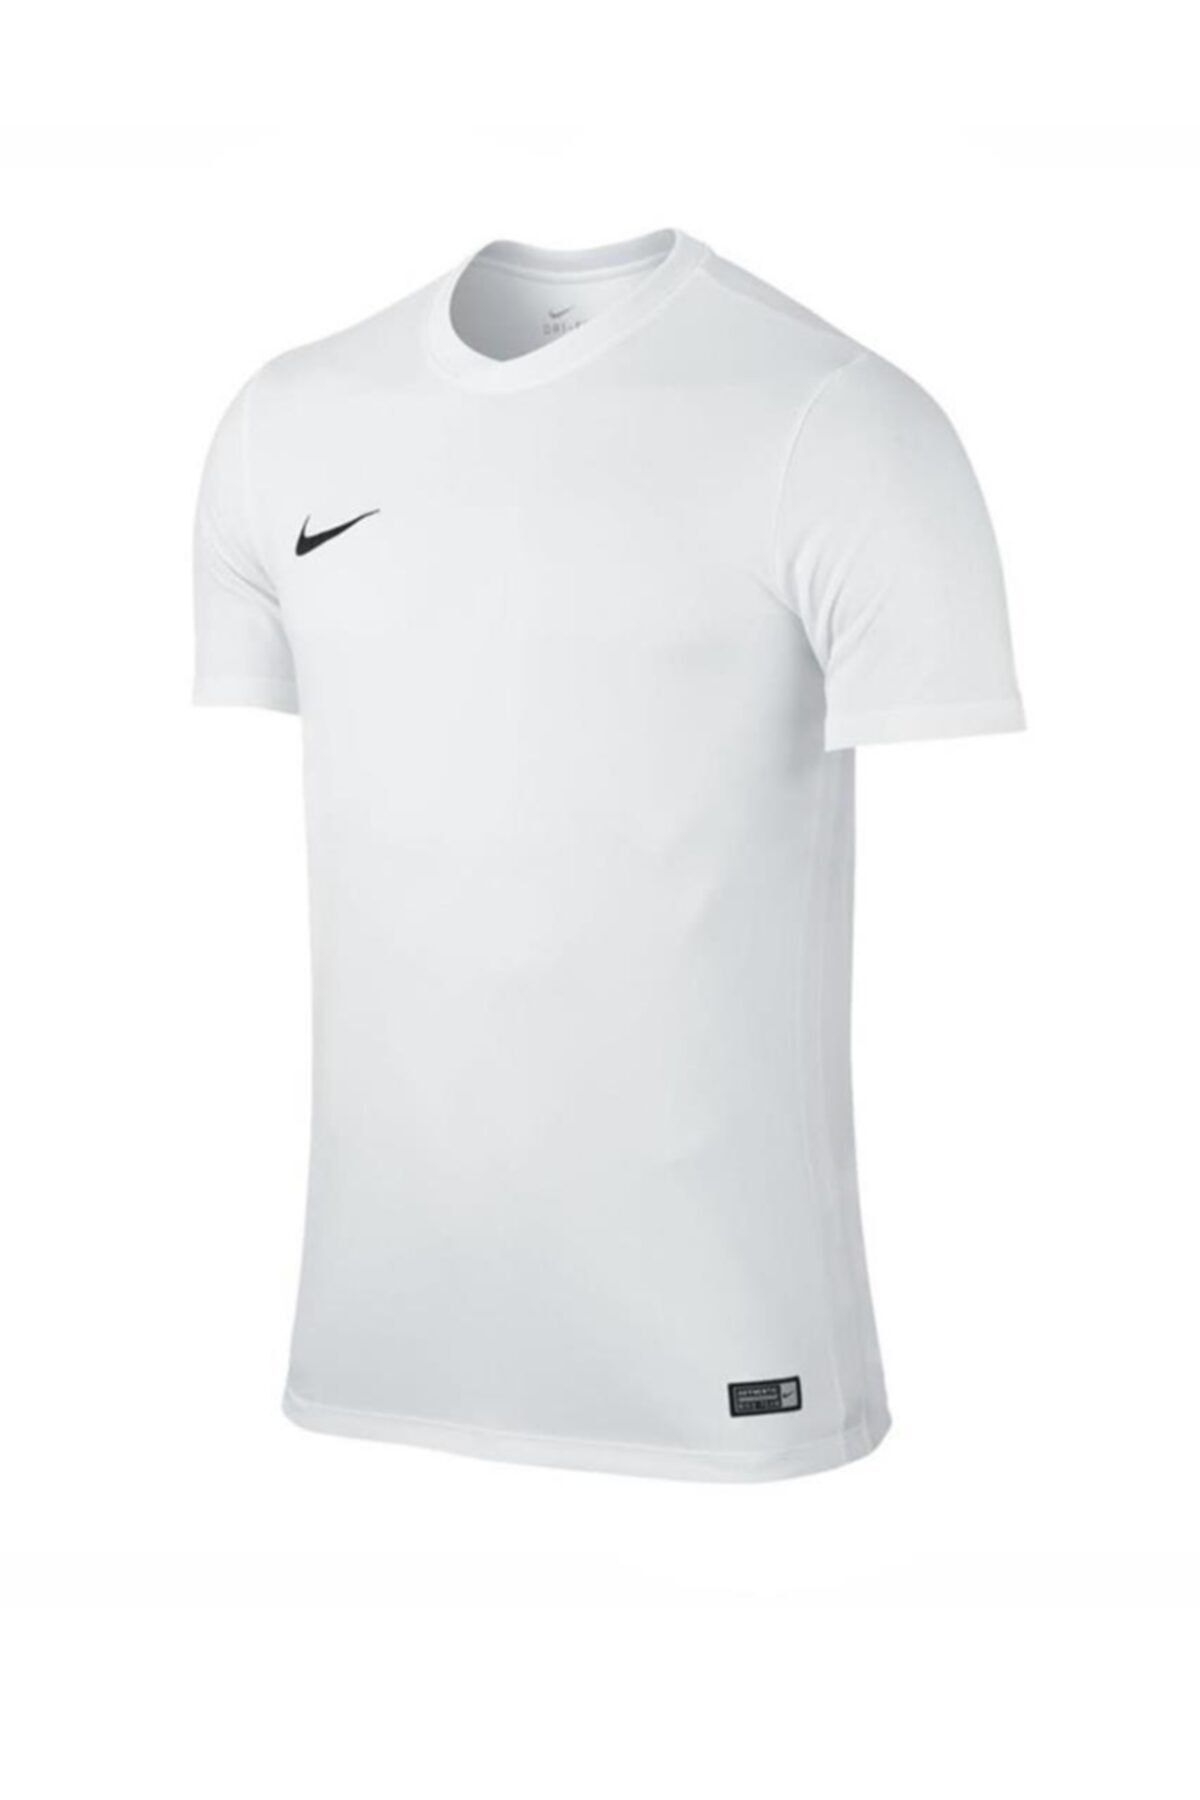 Nike Erkek Beyaz Forma 725891-100